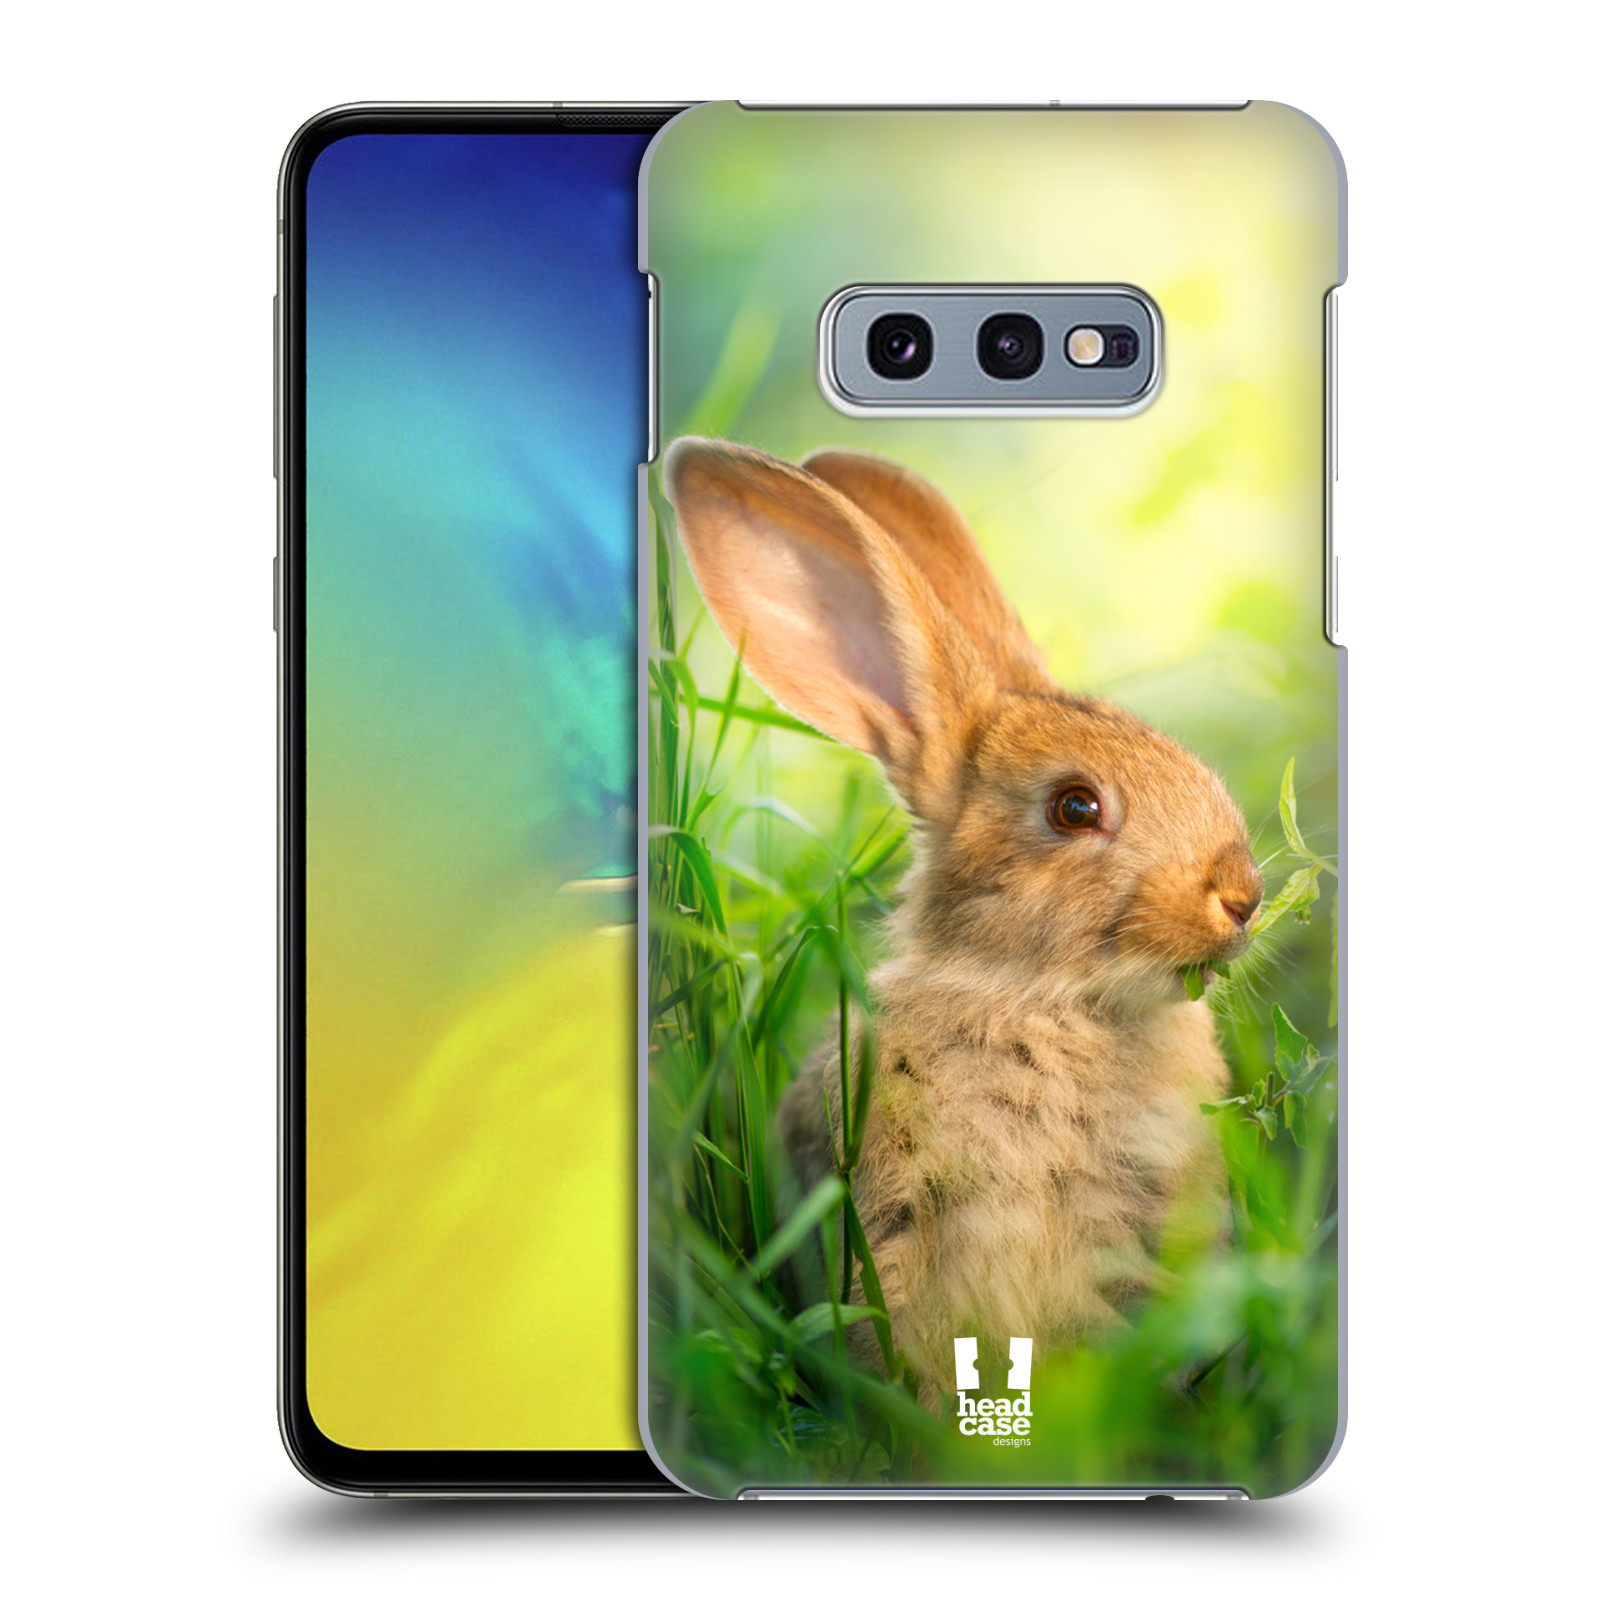 Pouzdro na mobil Samsung Galaxy S10e - HEAD CASE - vzor Divočina, Divoký život a zvířata foto ZAJÍČEK V TRÁVĚ ZELENÁ